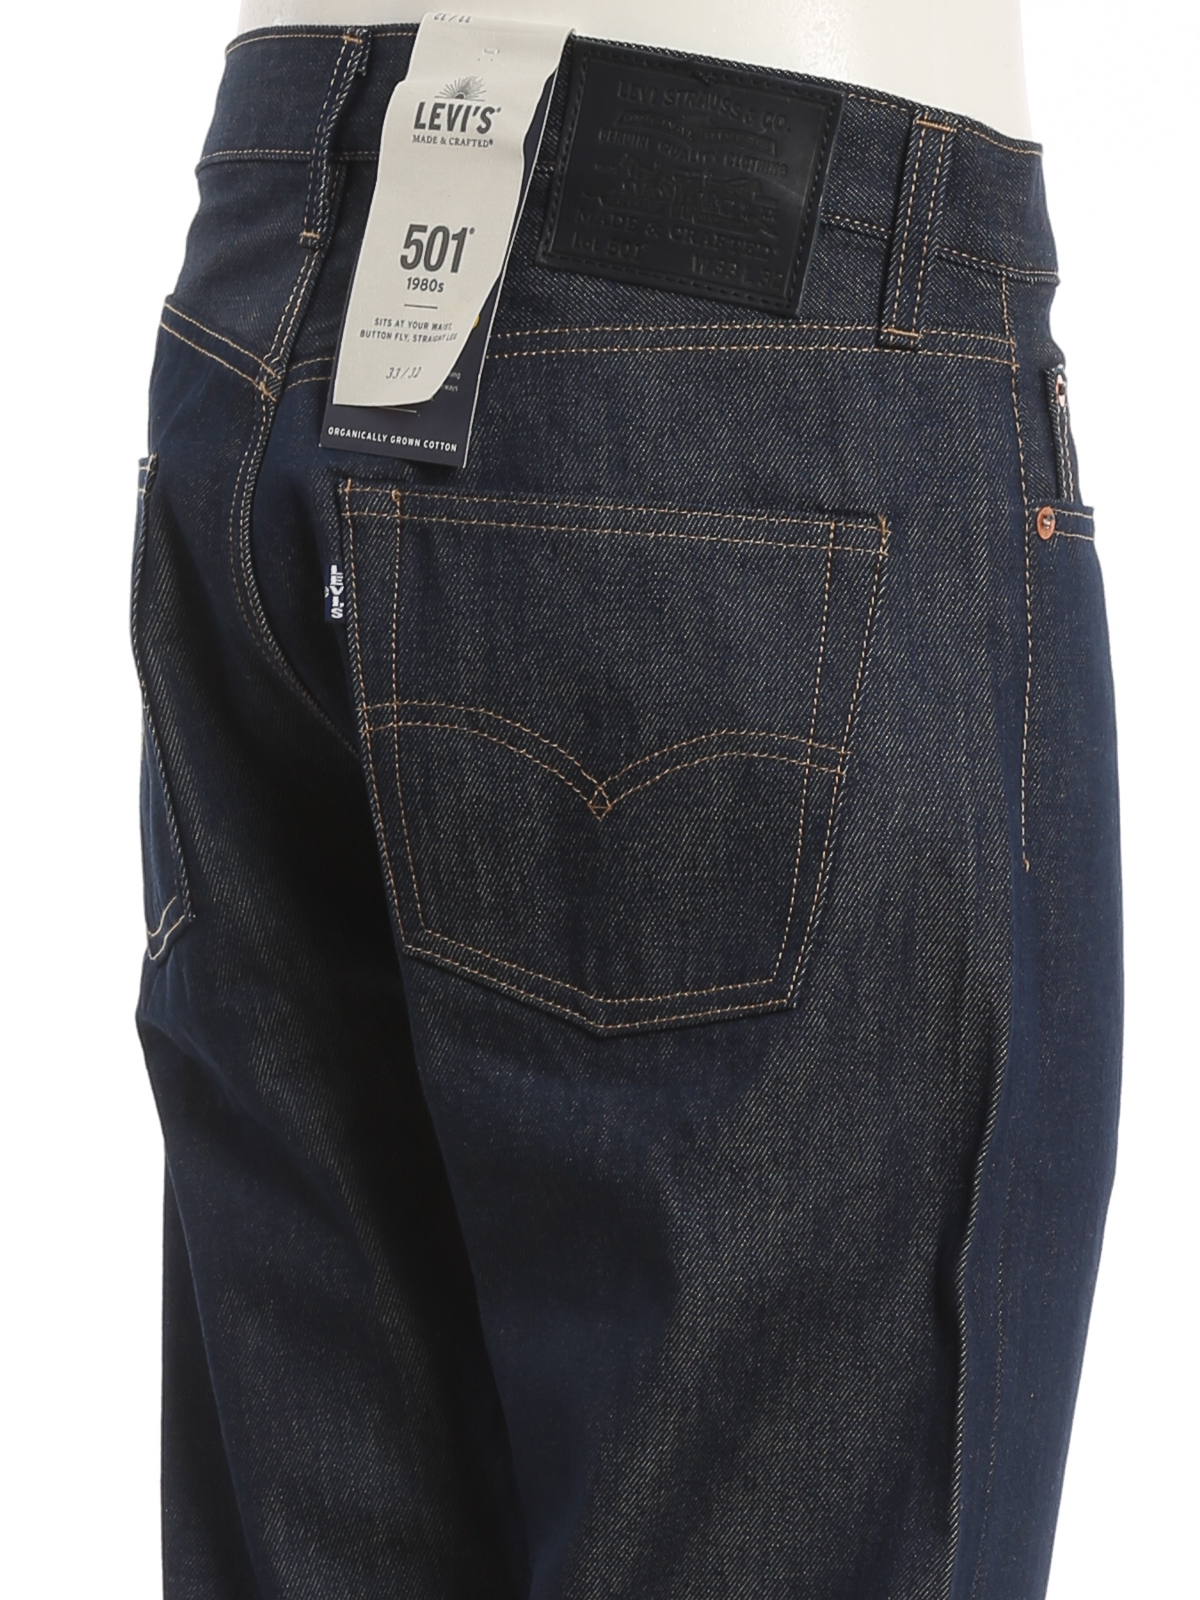 Straight leg jeans Levi'S - 501® 1980s jeans - A22310000 